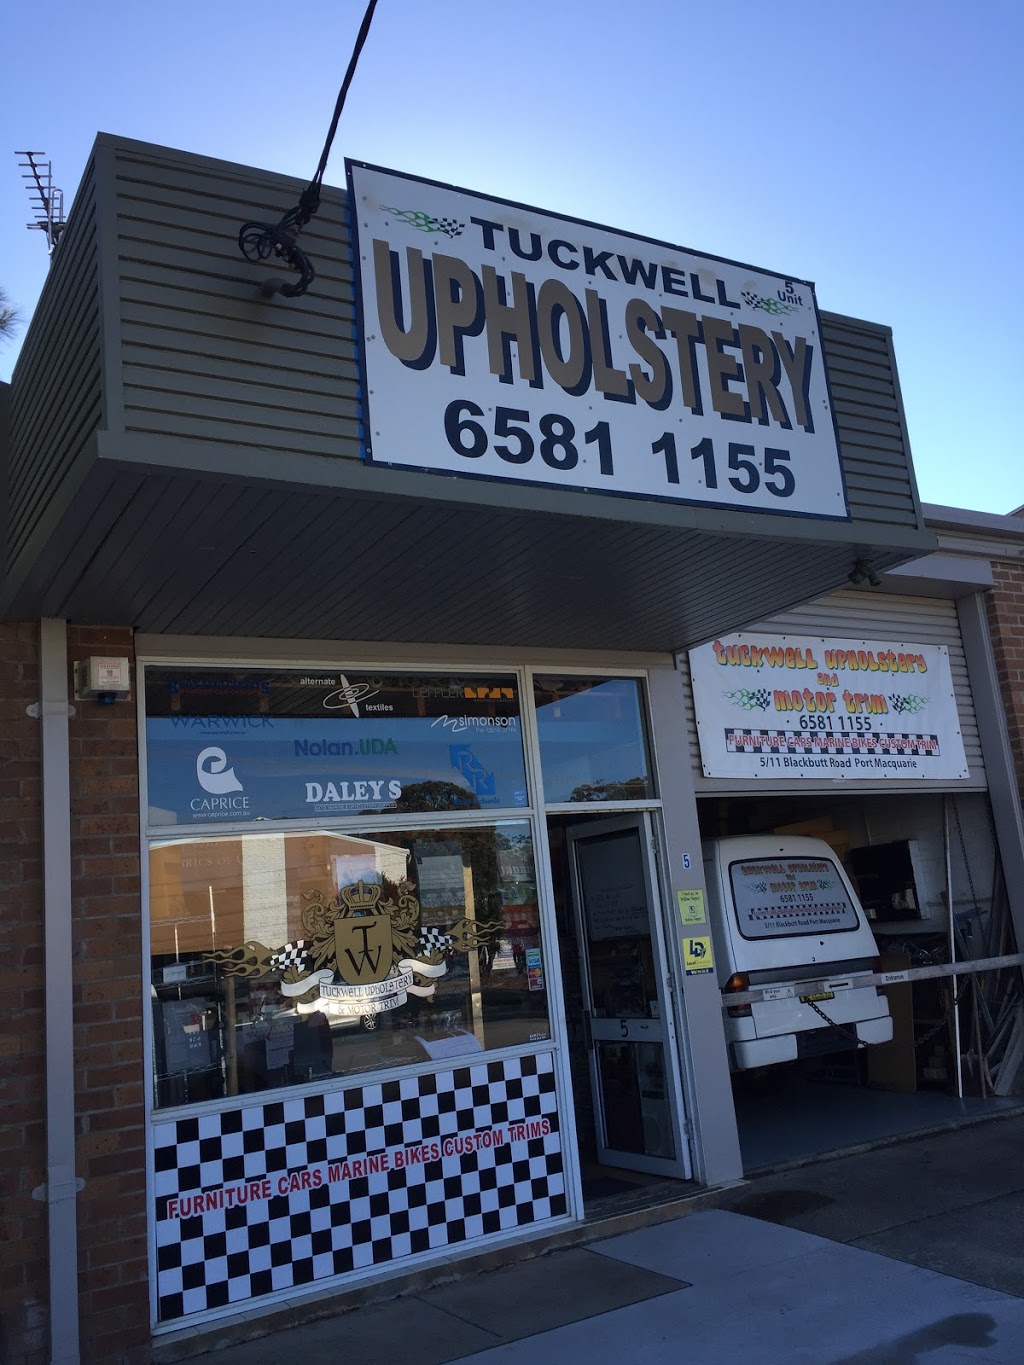 Tuckwell Upholstery | furniture store | 5/11 Blackbutt Rd, Port Macquarie NSW 2444, Australia | 0265811155 OR +61 2 6581 1155